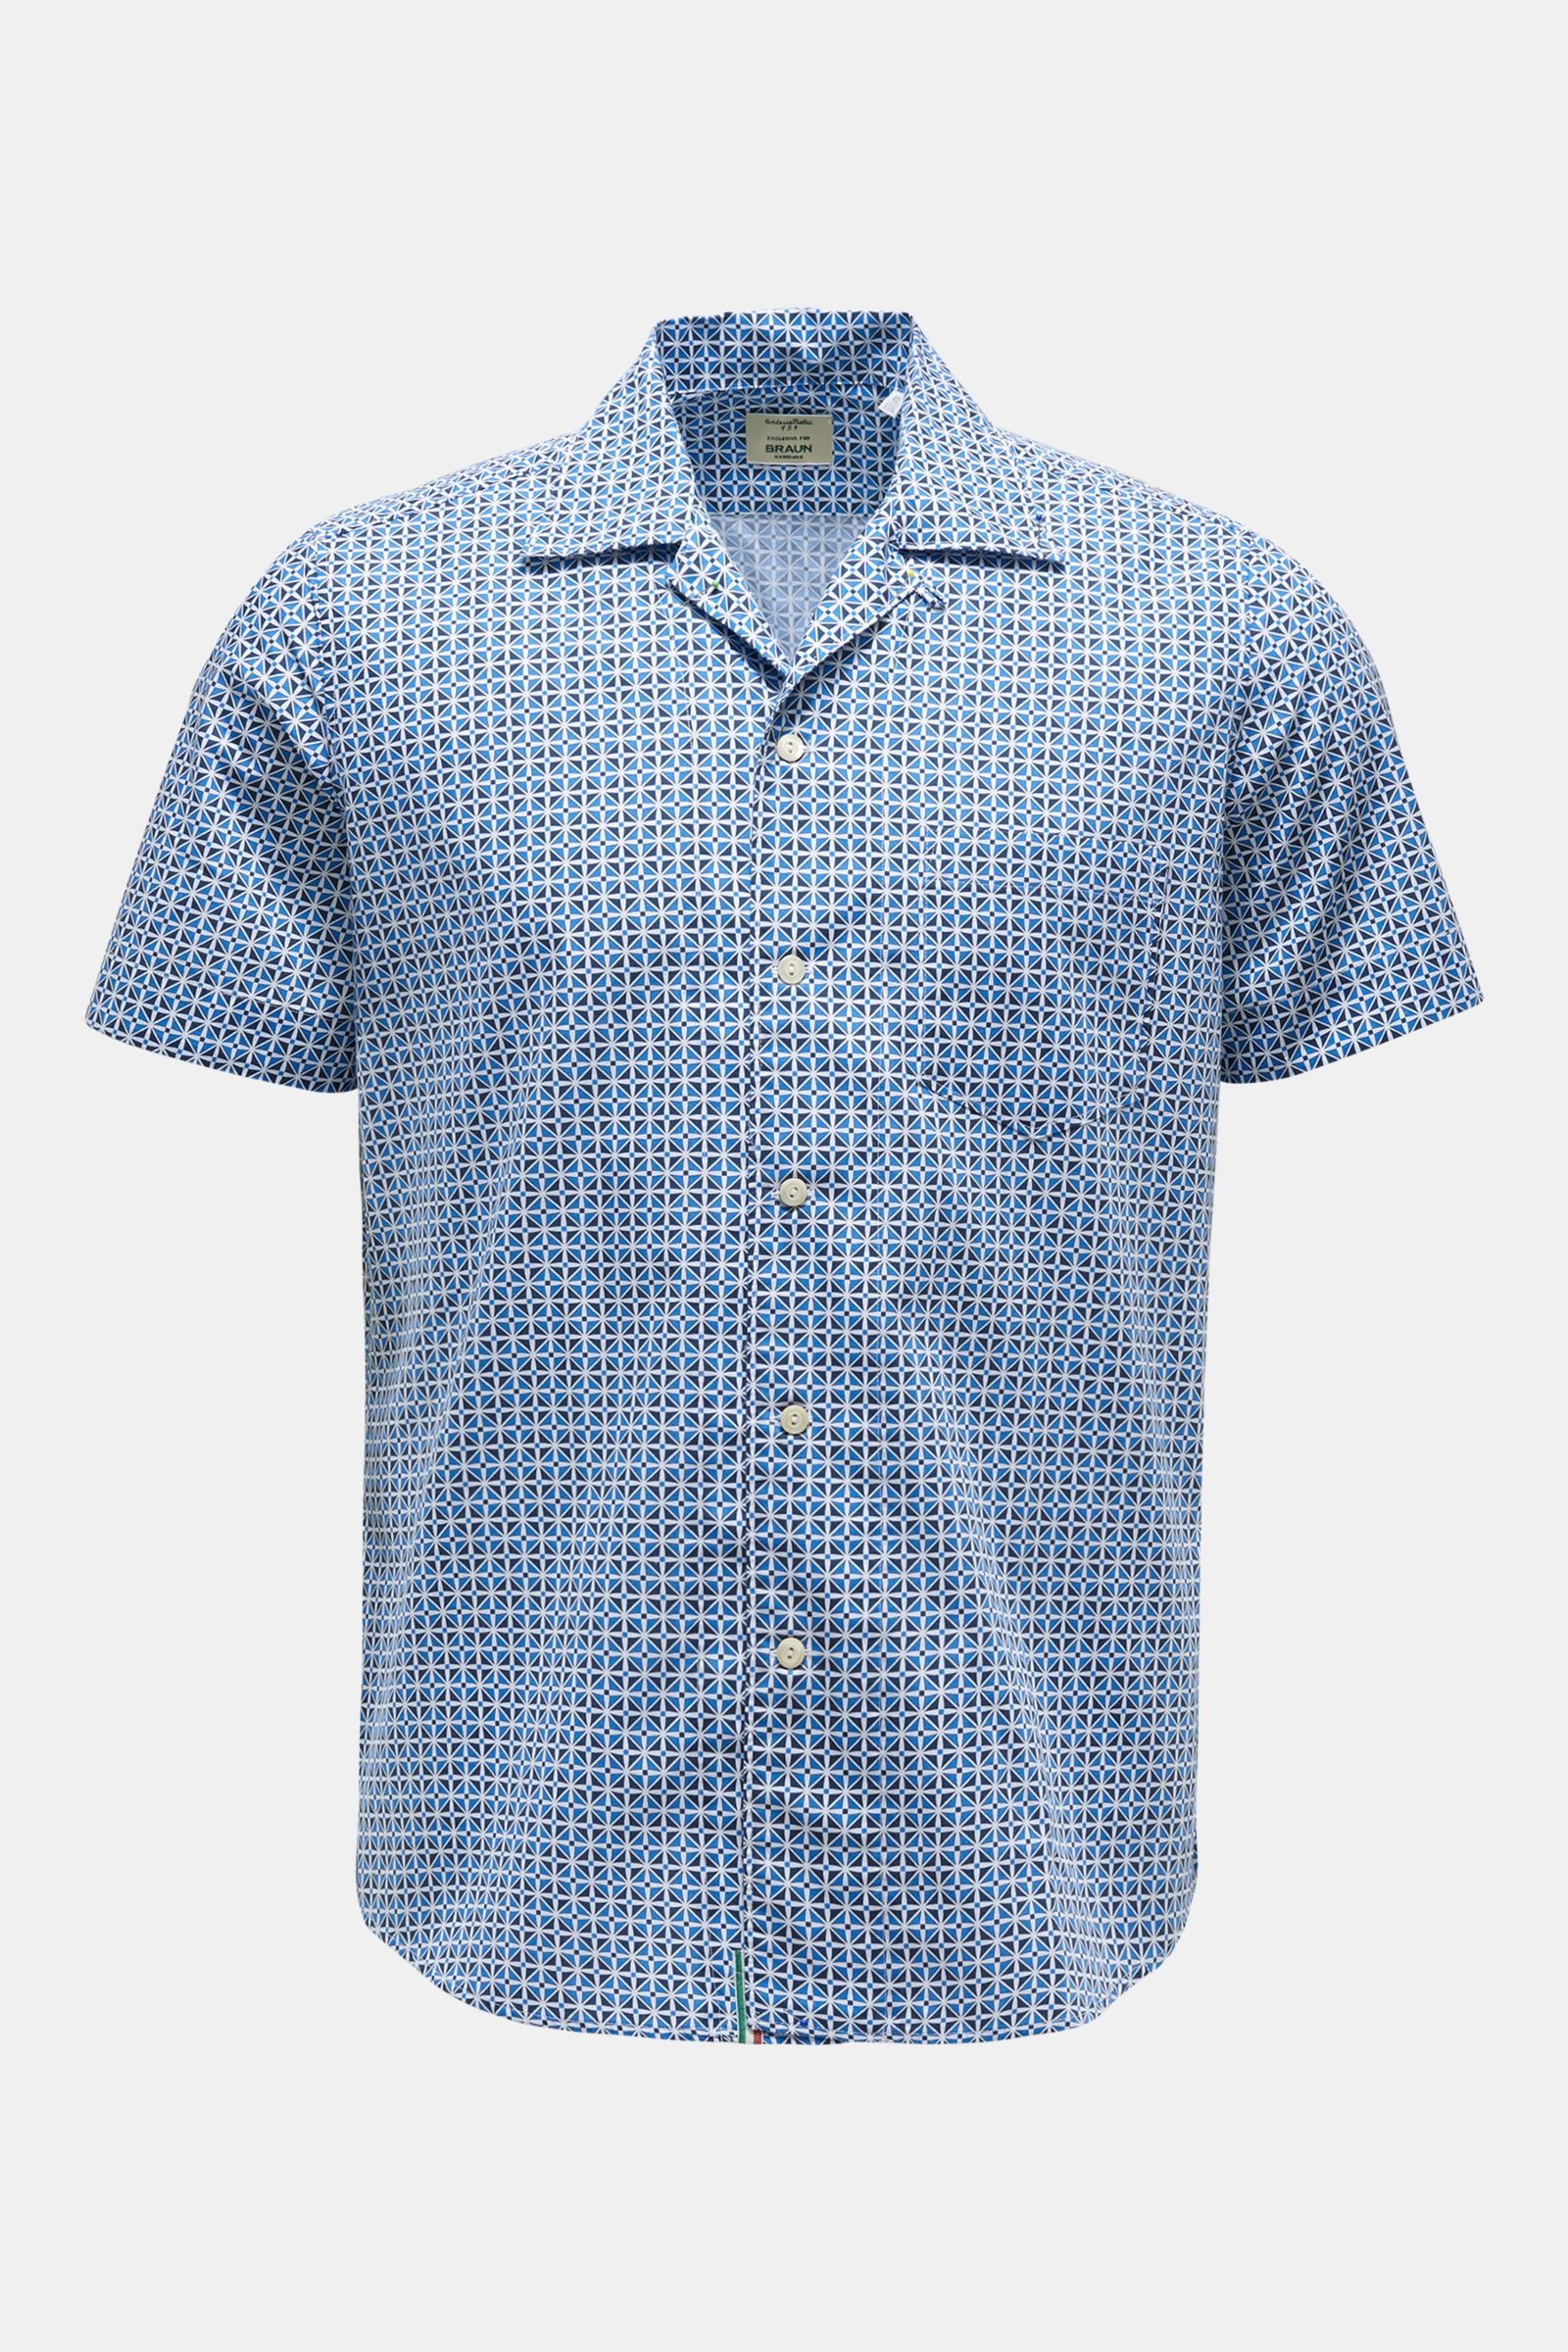 Short sleeve shirt English collar blue/navy patterned